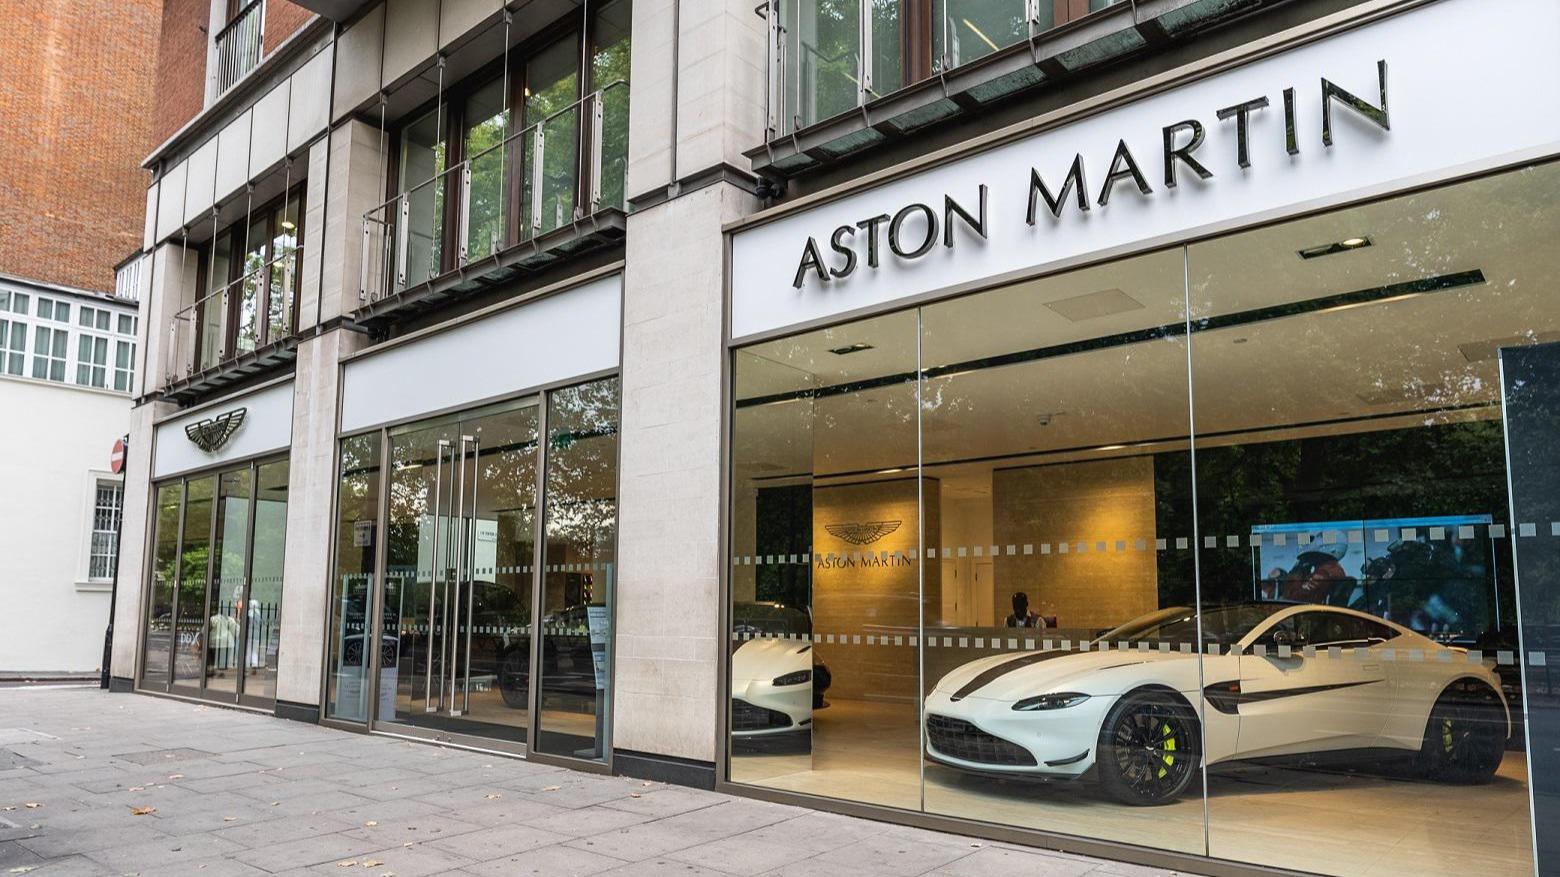 Aston Martin London Mayfair London 020 7235 8888